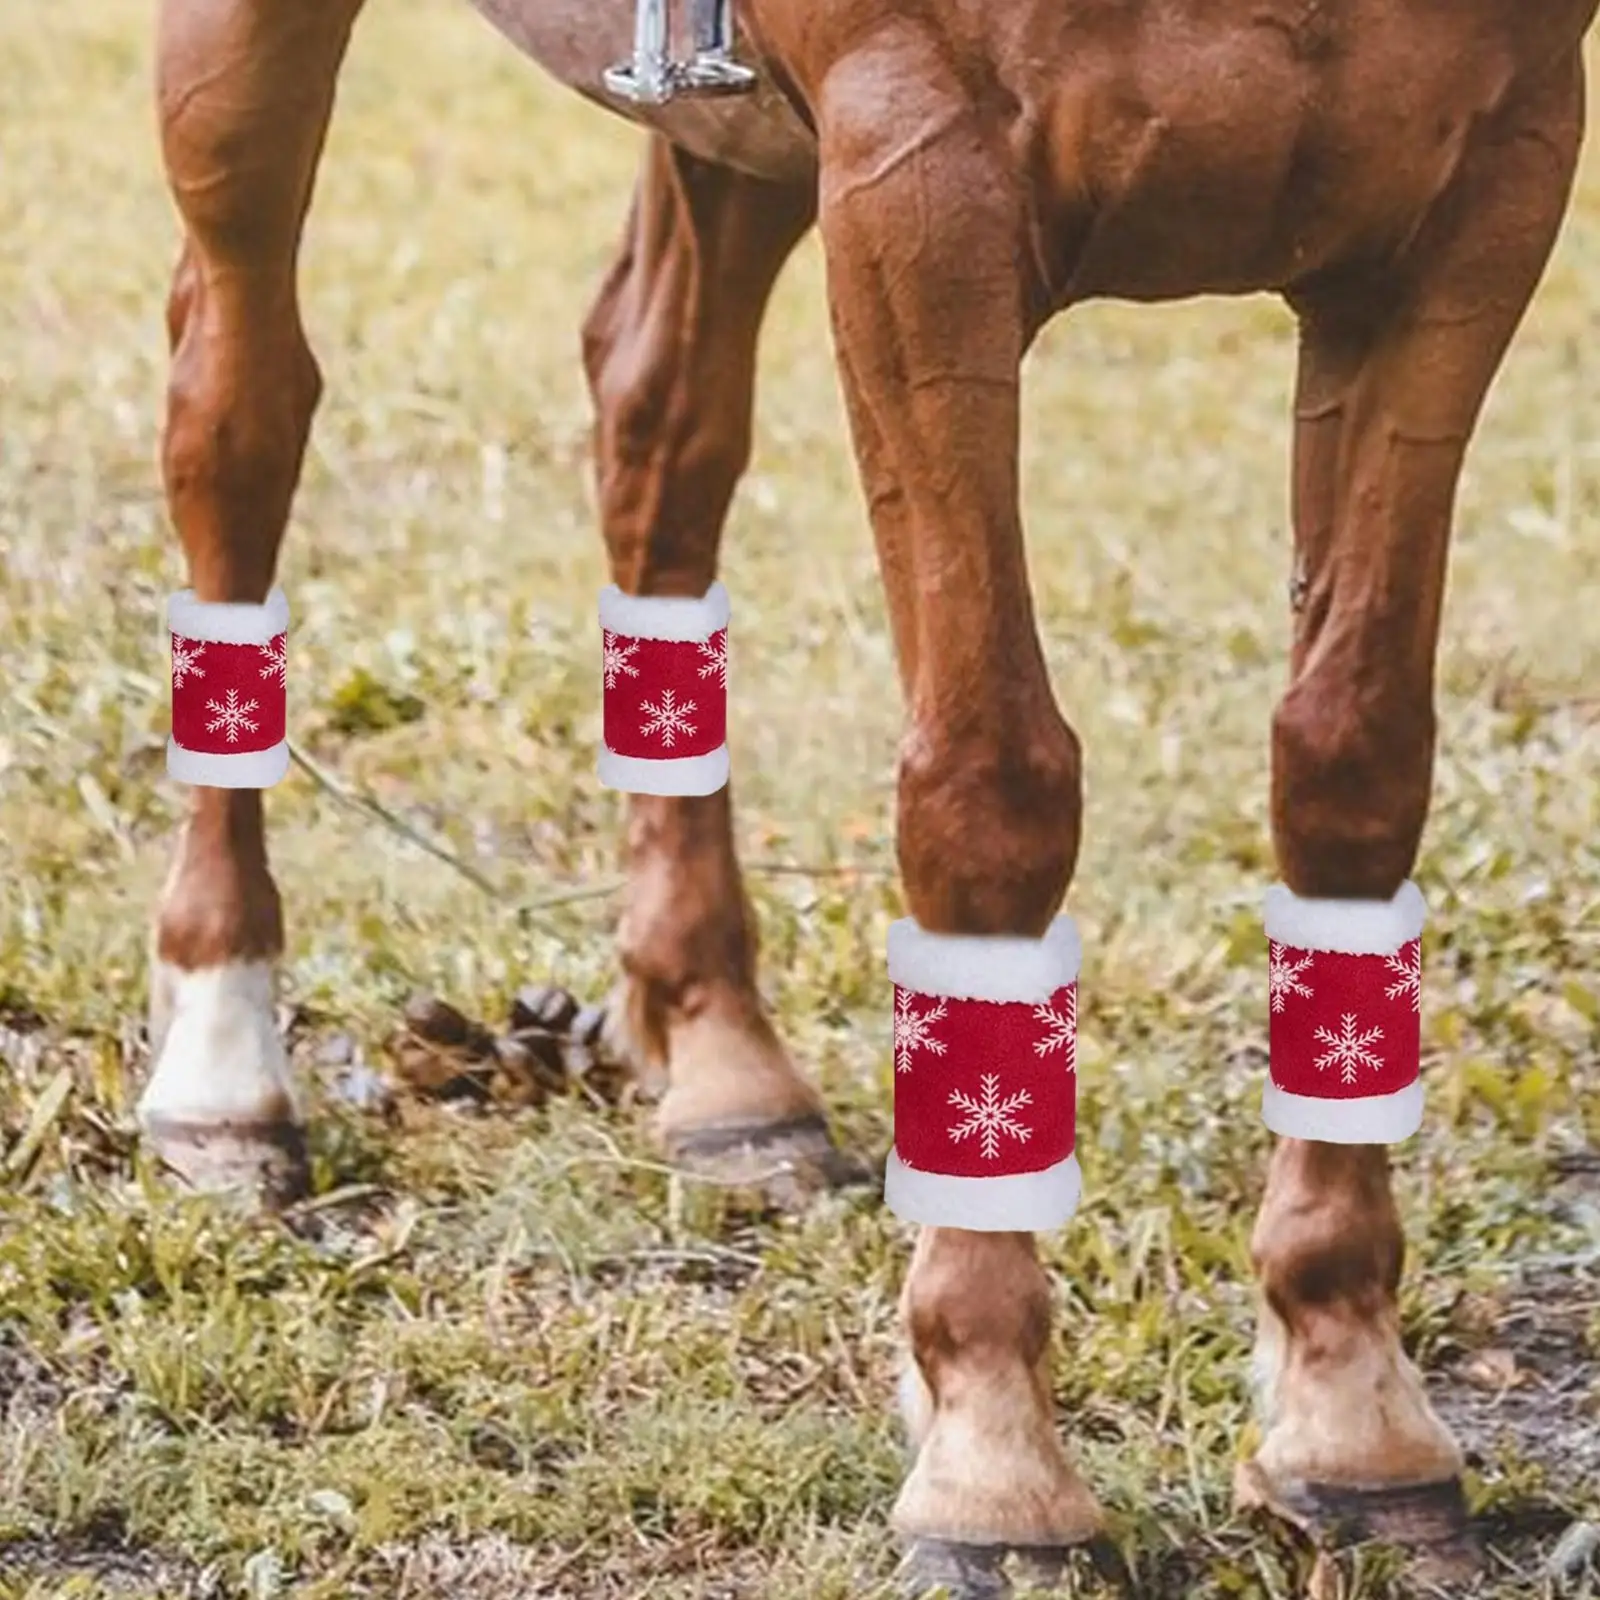 4x Horse Leg Wraps Sheep Leg Wraps Warmer Leg Guard Fly Leg Boots Wrap for Christmas Party Exercising Training Sports Dress up